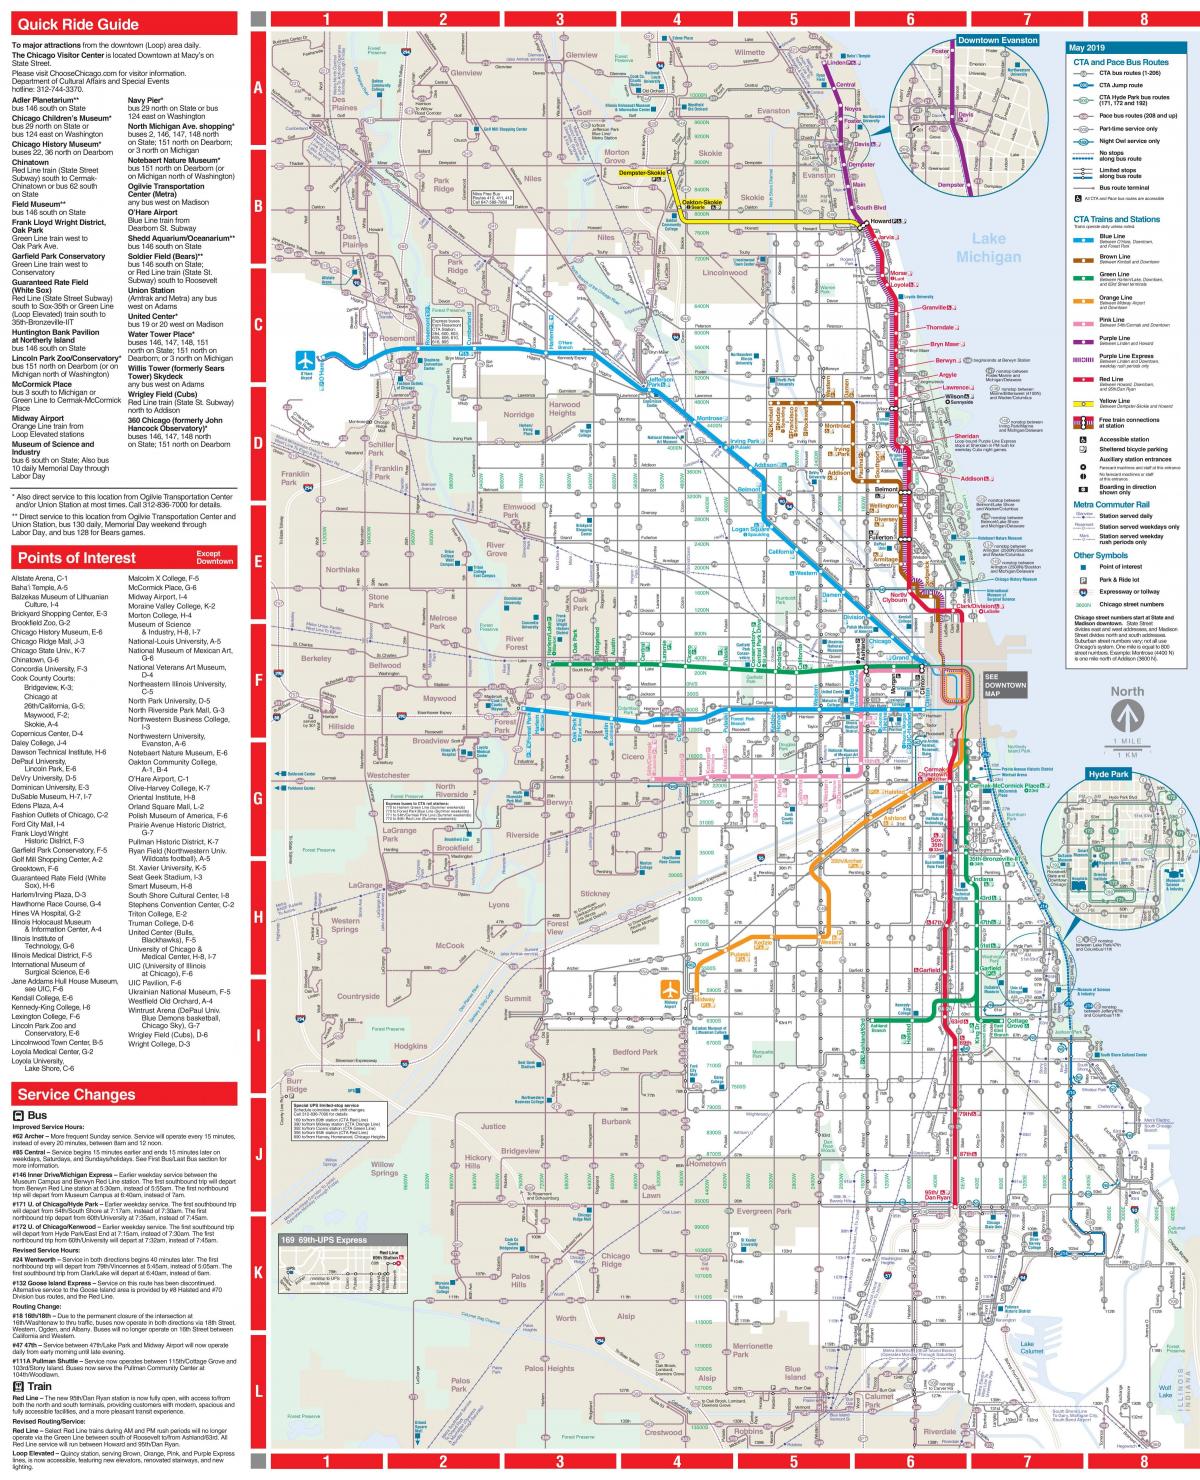 Chicago transportation map